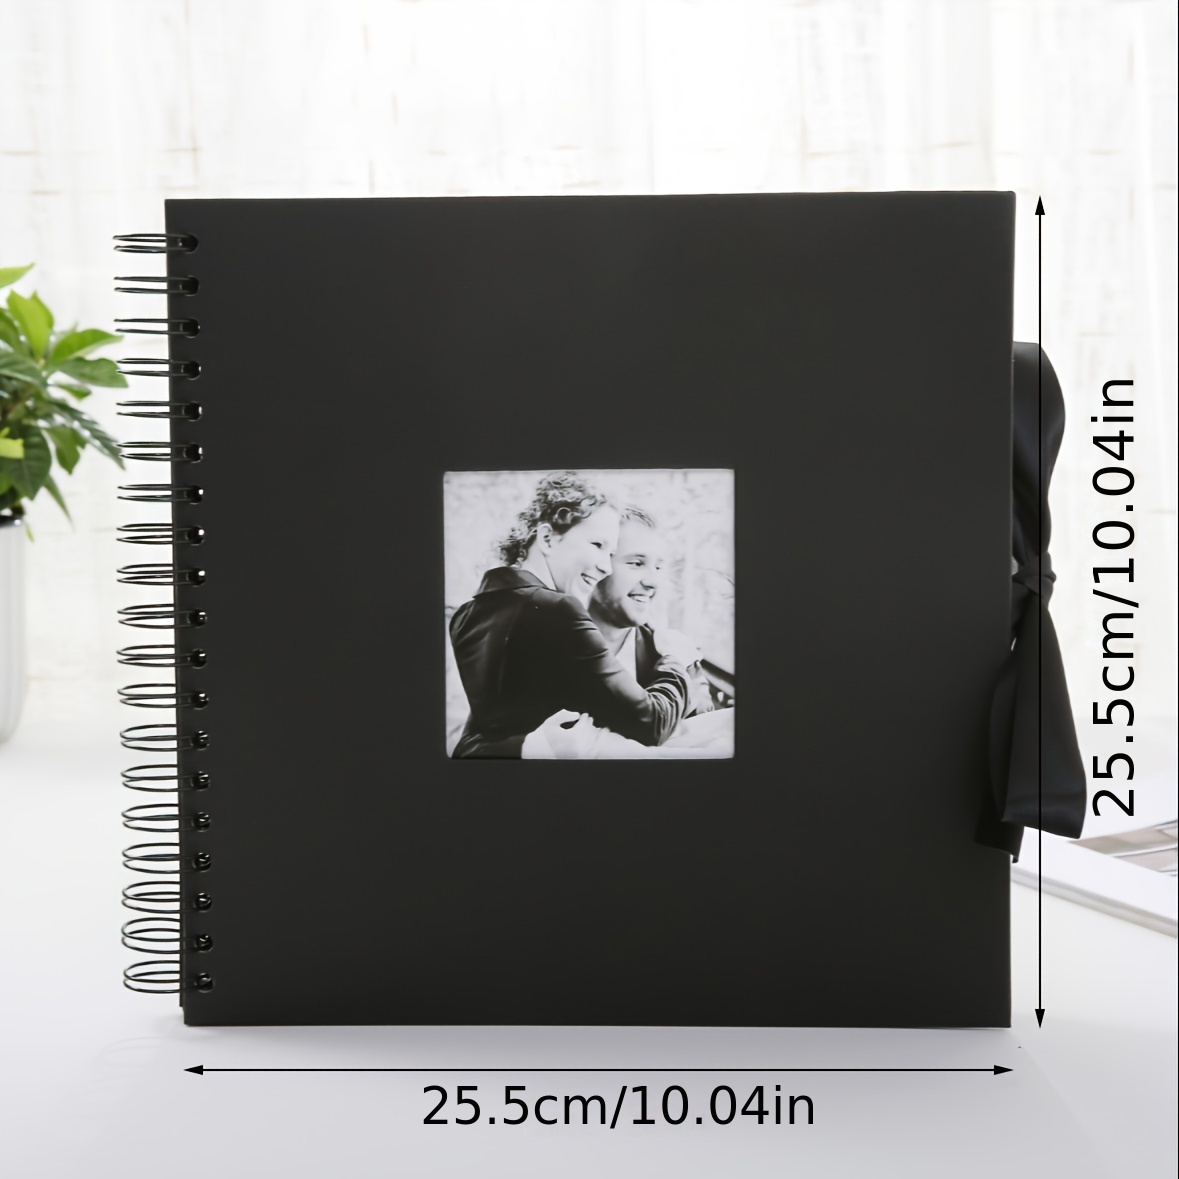  10 x 10 Inch DIY Scrapbook Album Black, 80 Pages Photo